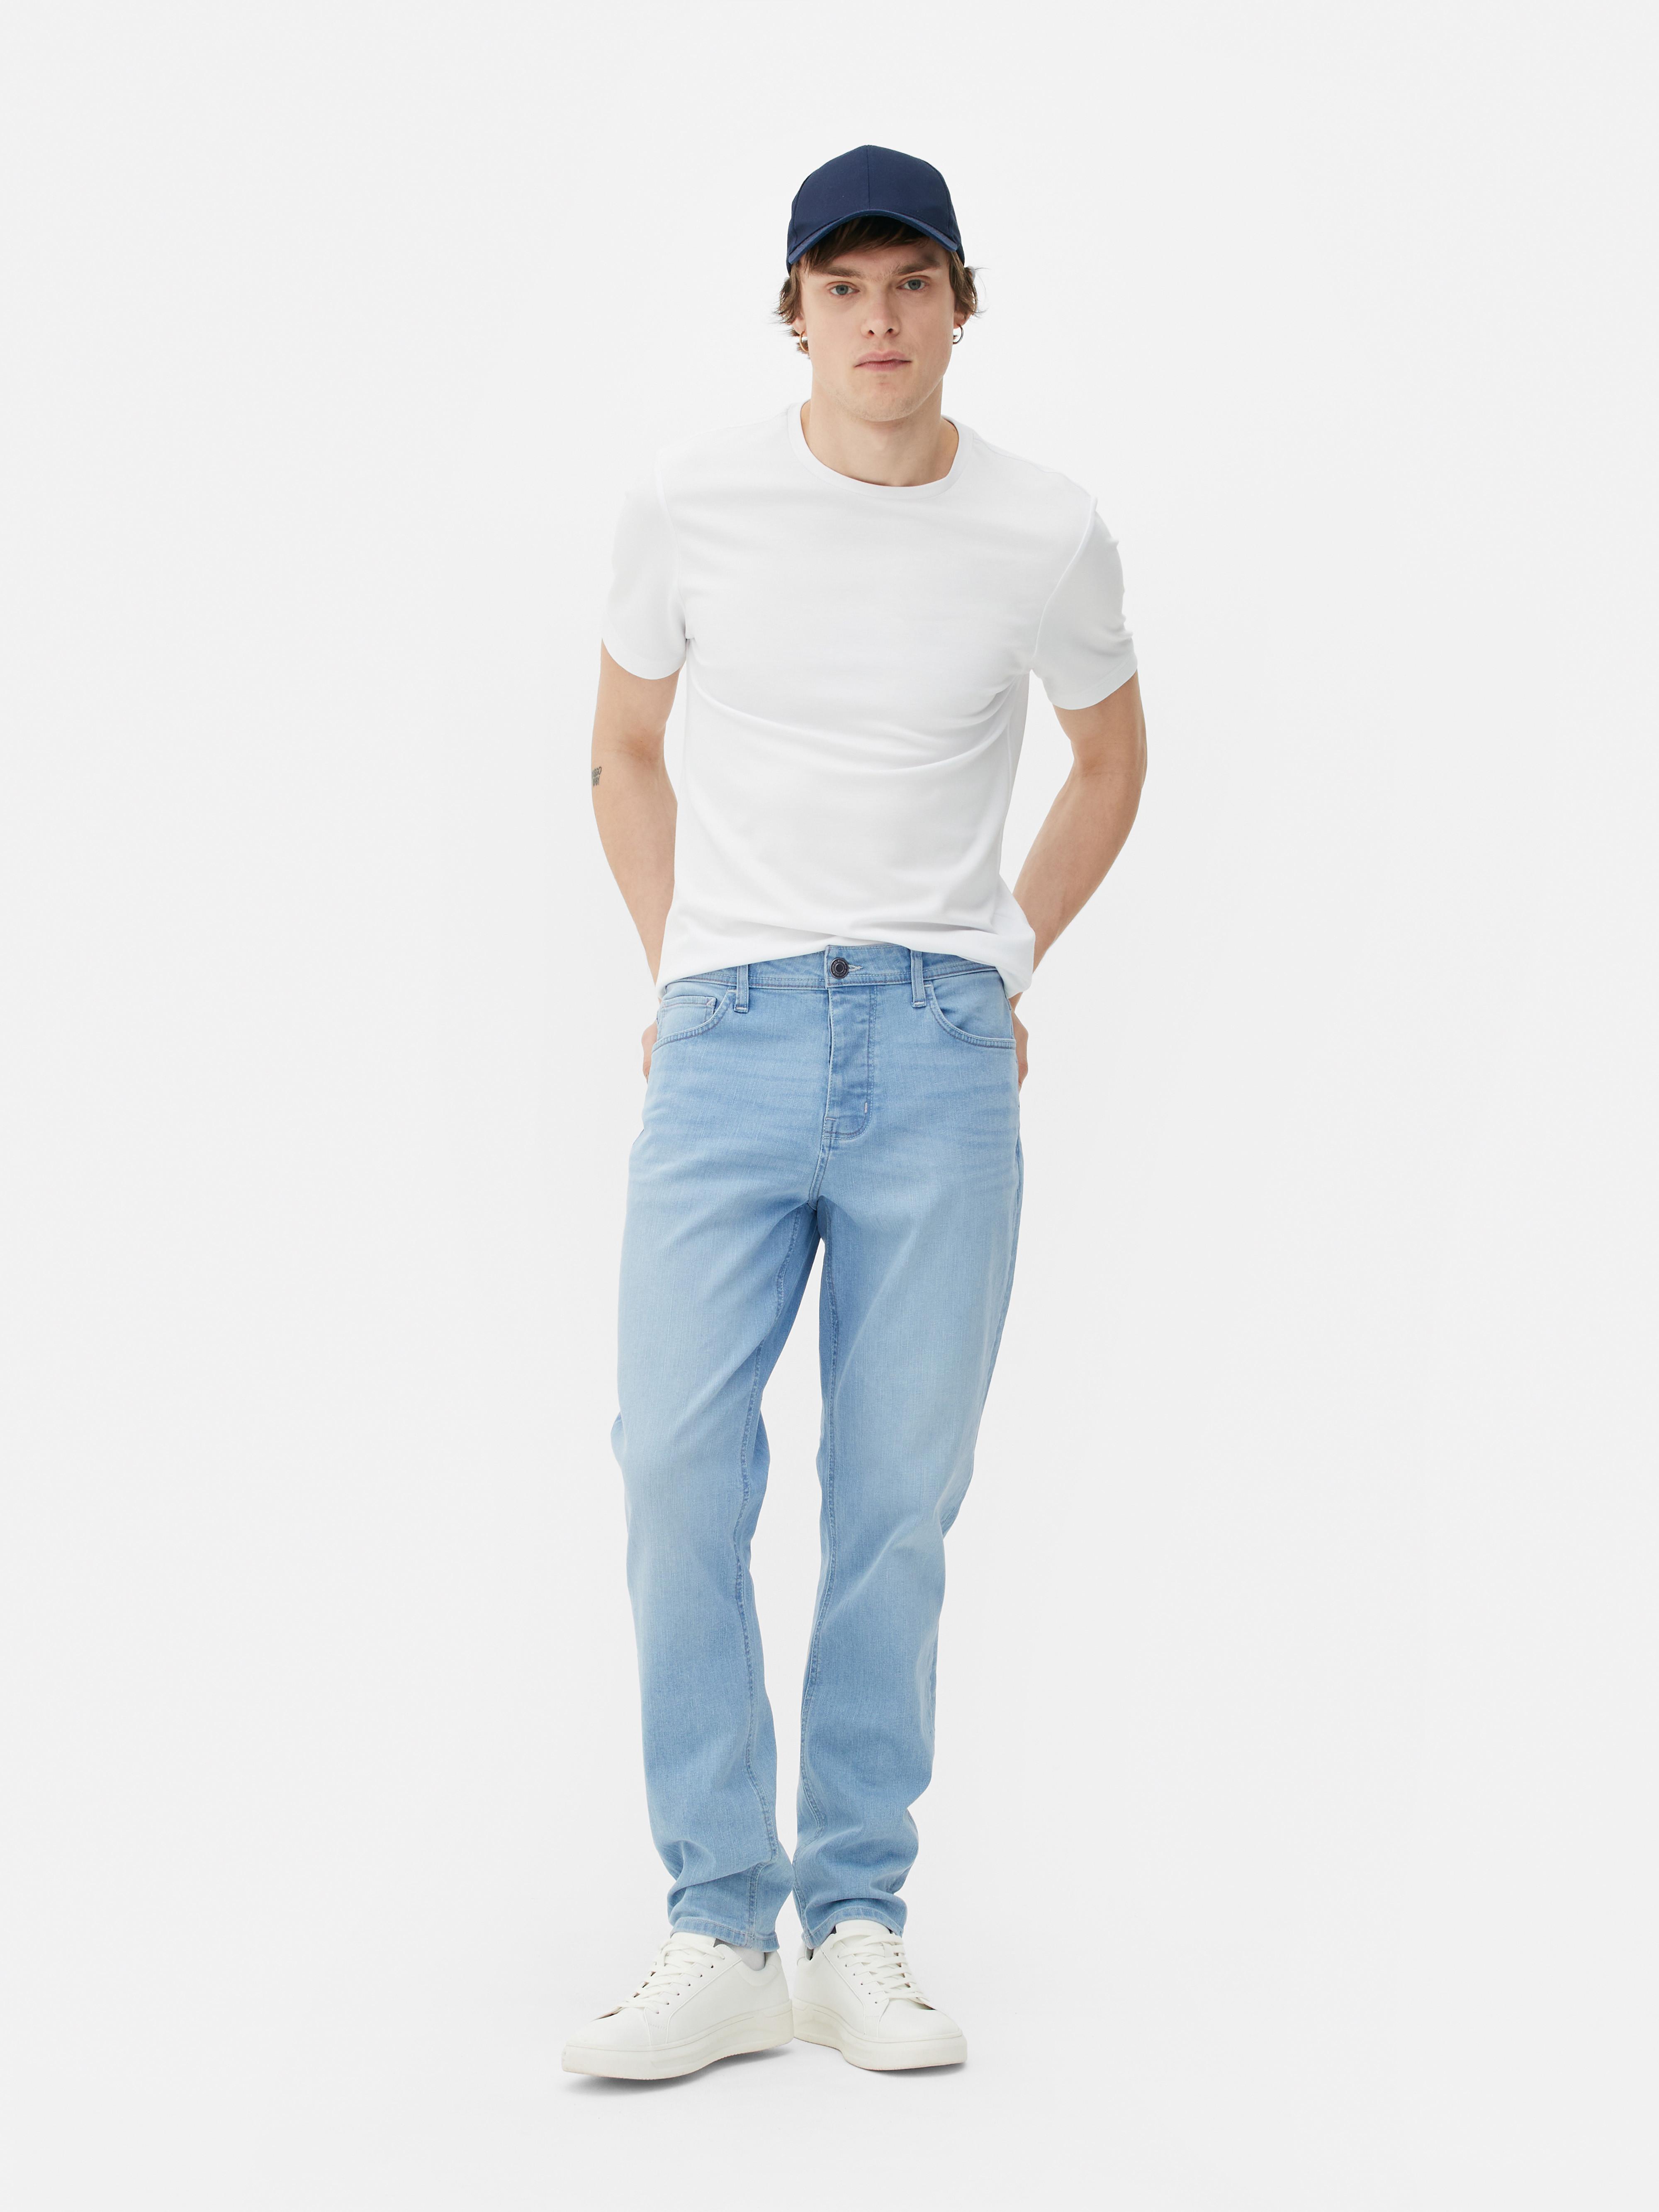 Multiplicación Siete Imposible Men's Jeans | Straight, Skinny & Ripped | Primark